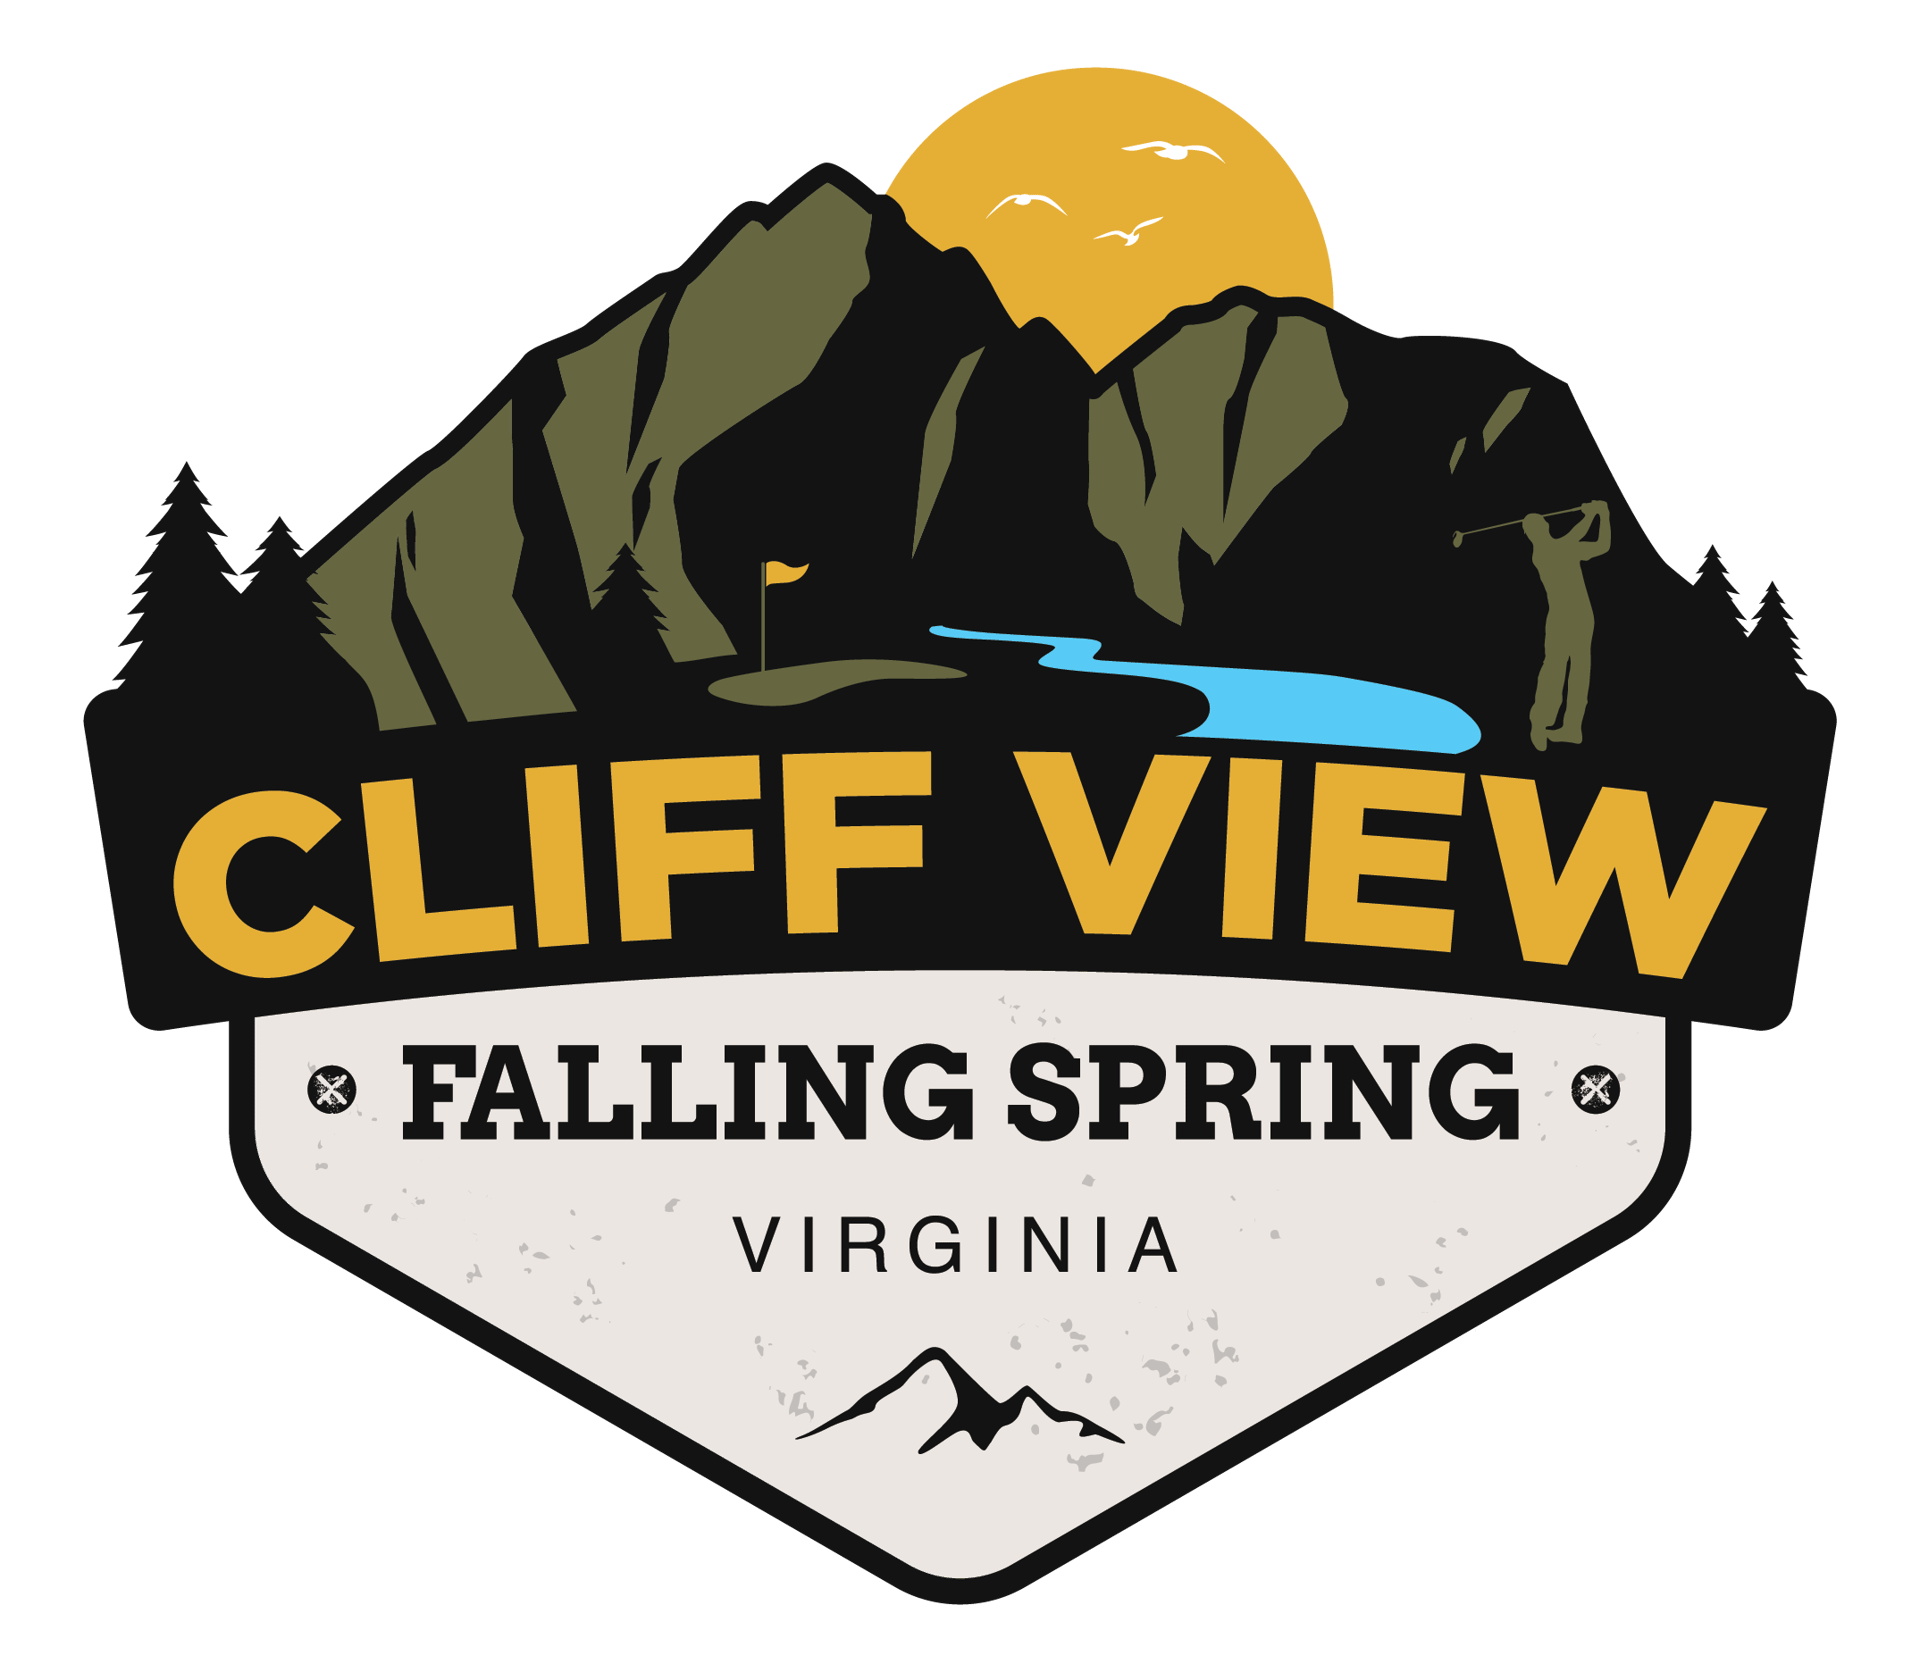 Cliff View Falling Spring, VA